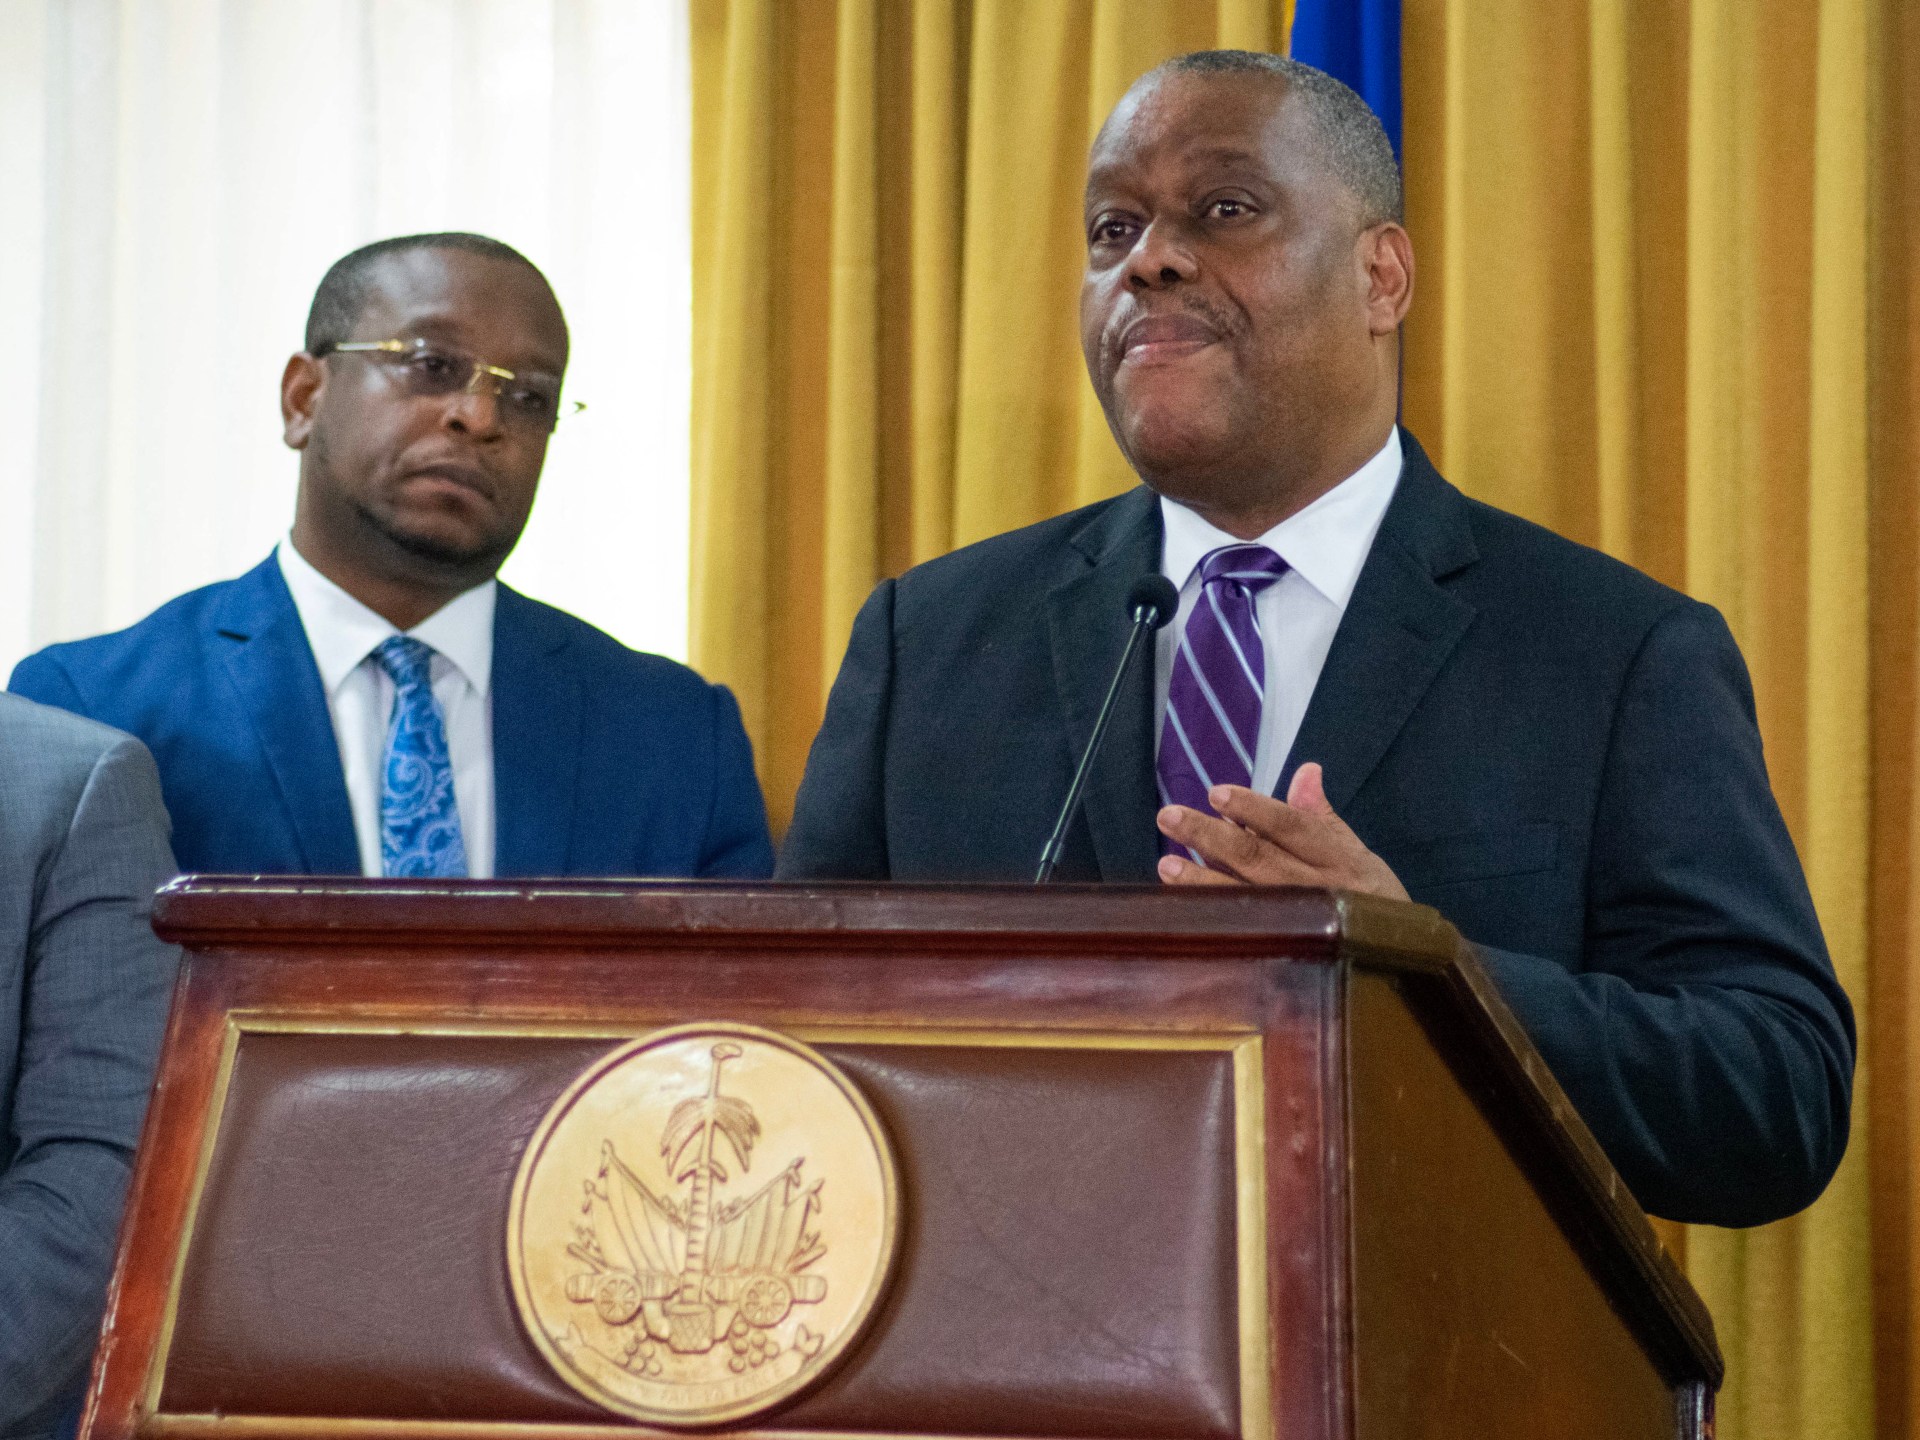 Haiti’s interim Prime Minister Garry Conille forms new government